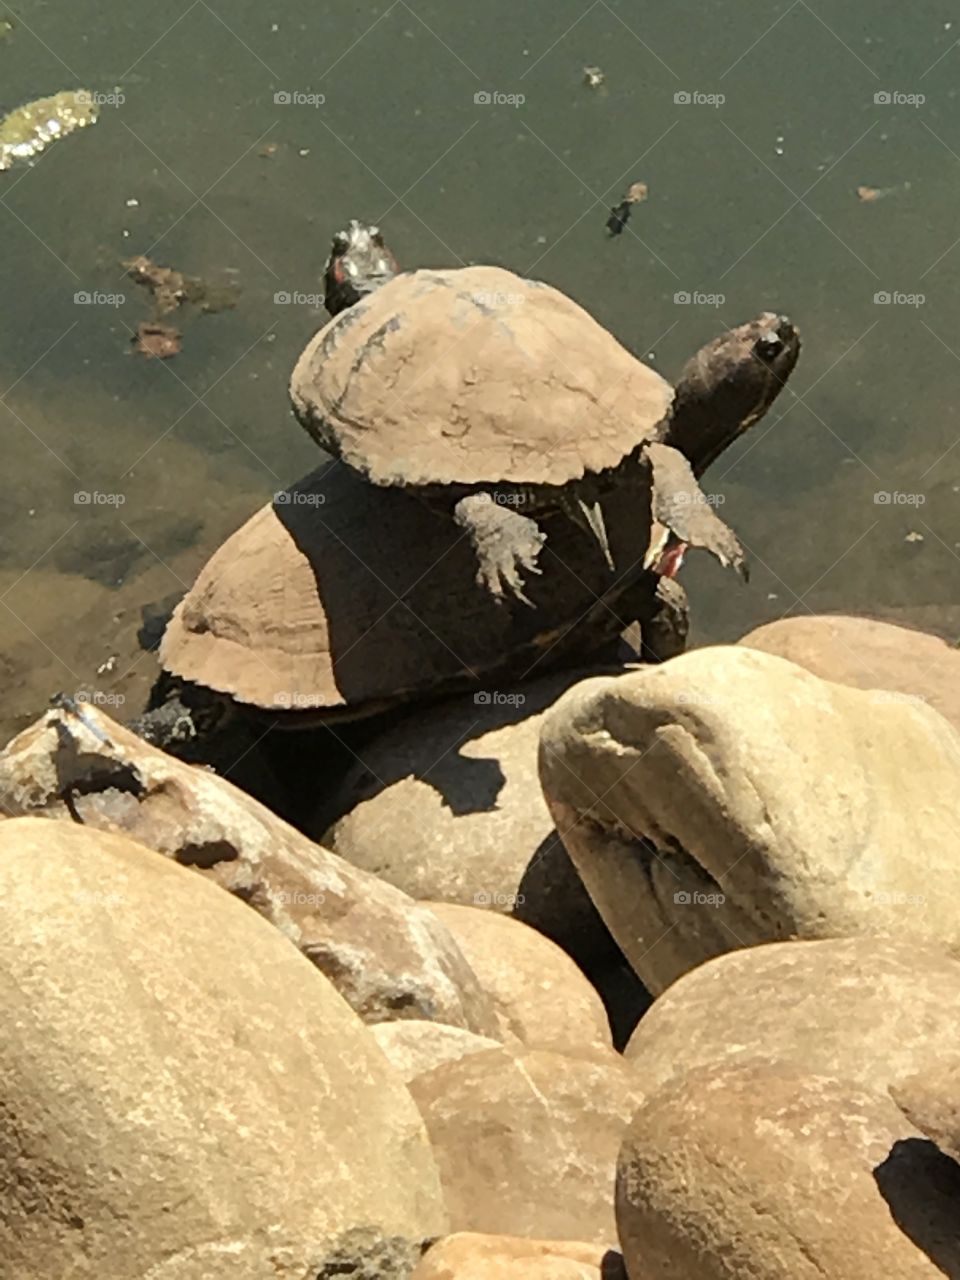 Two turtles acrobats outside water wet rocks green brown tortoise 